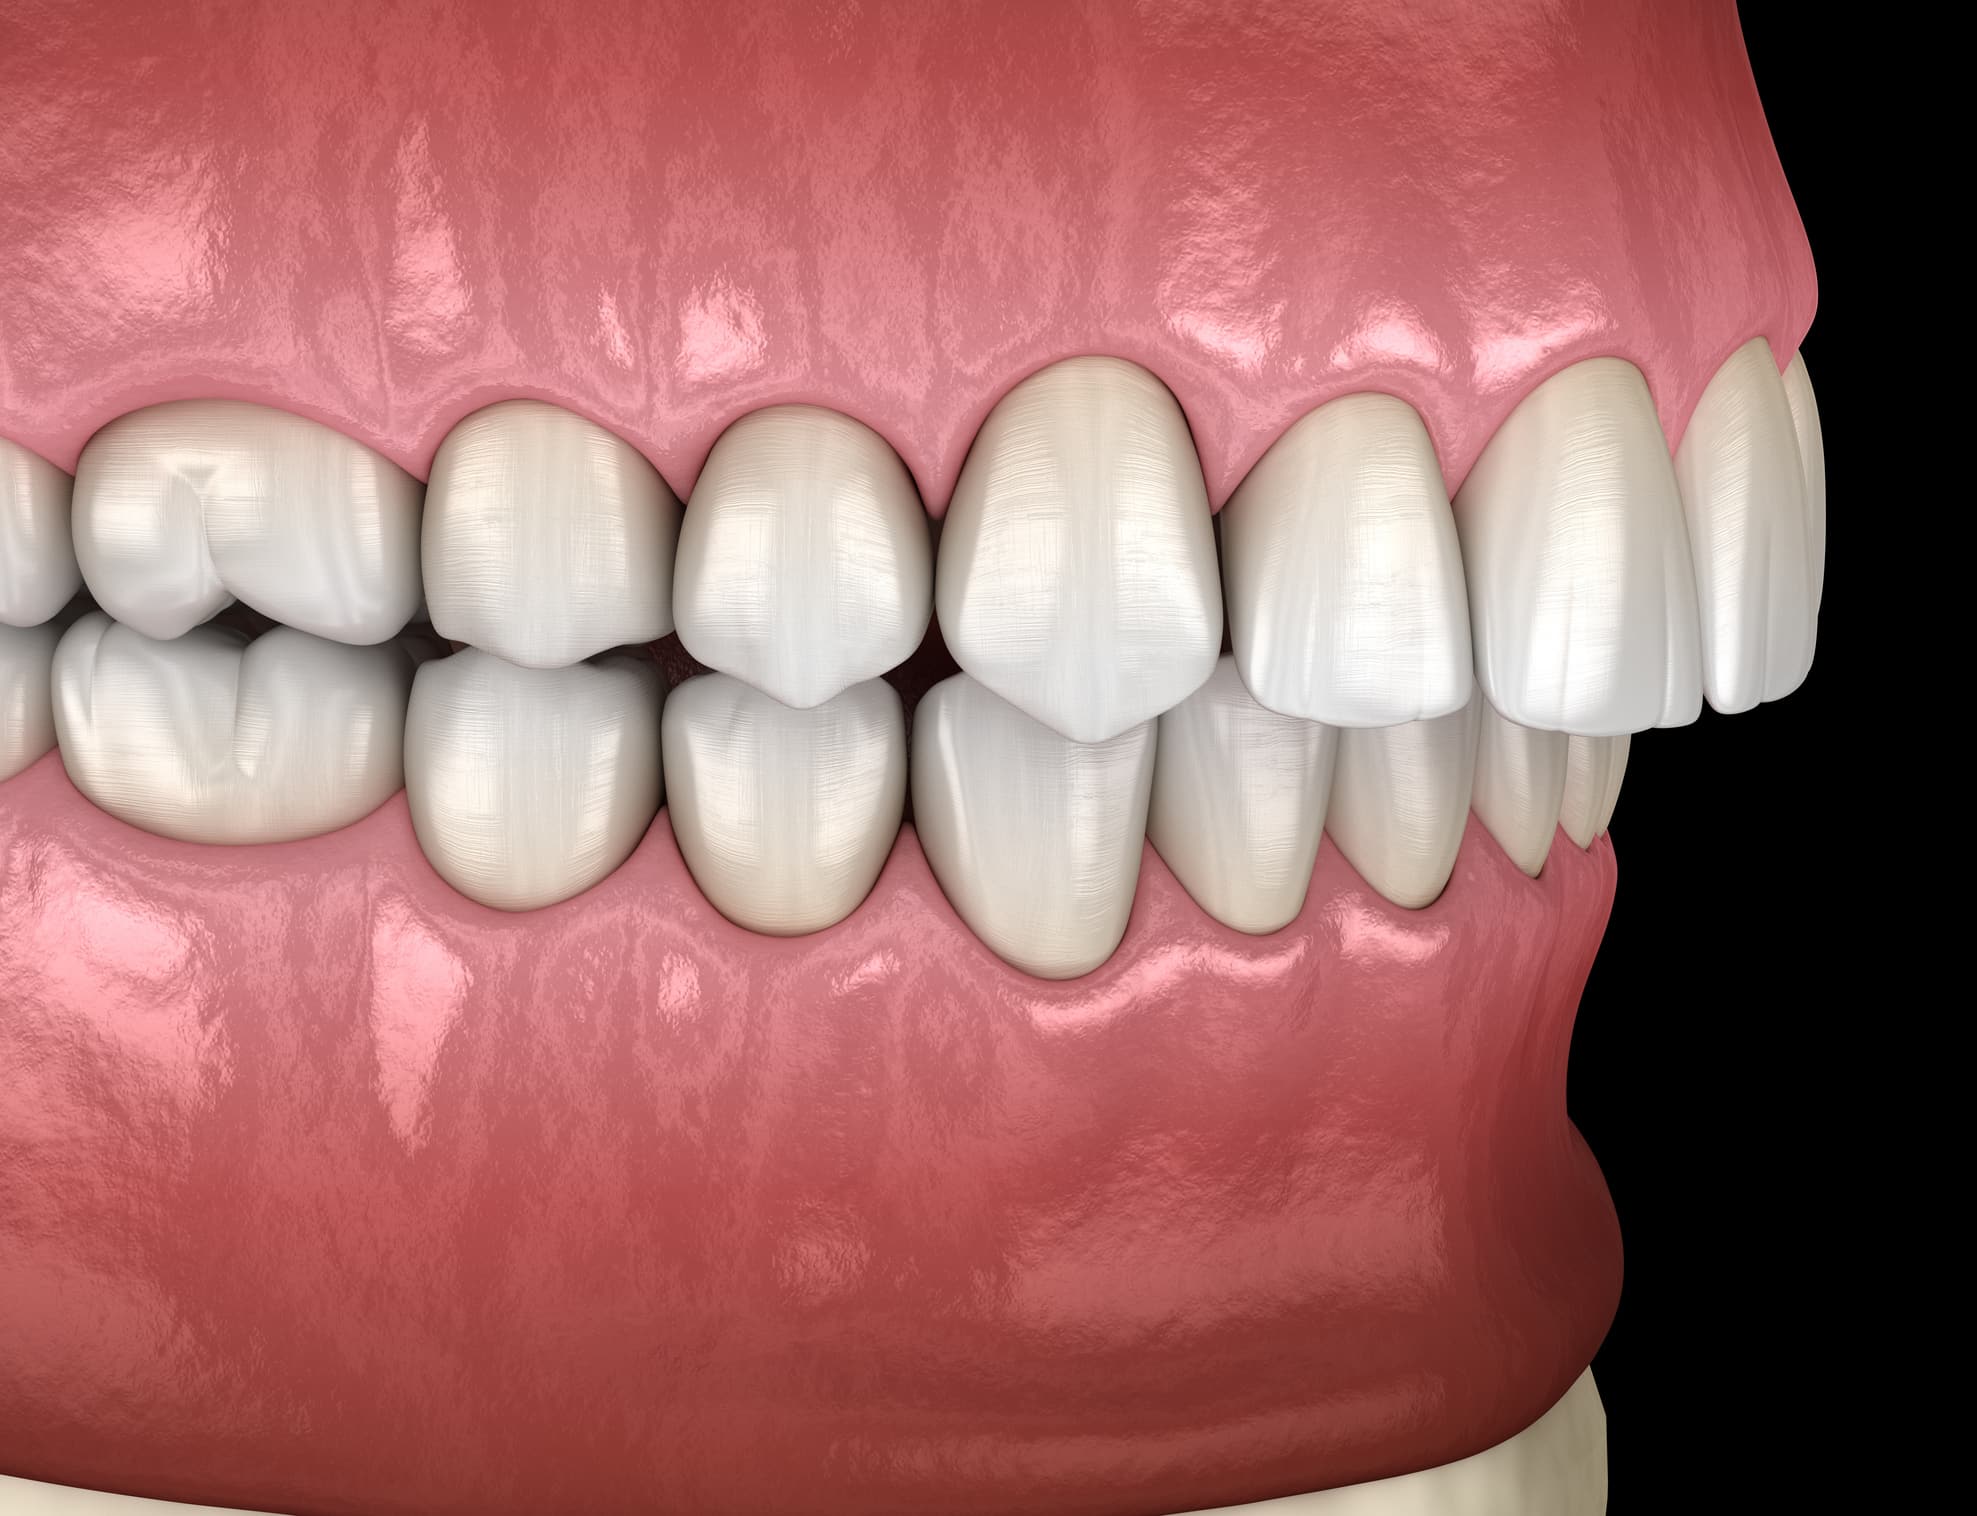 Overbite dental occlusion